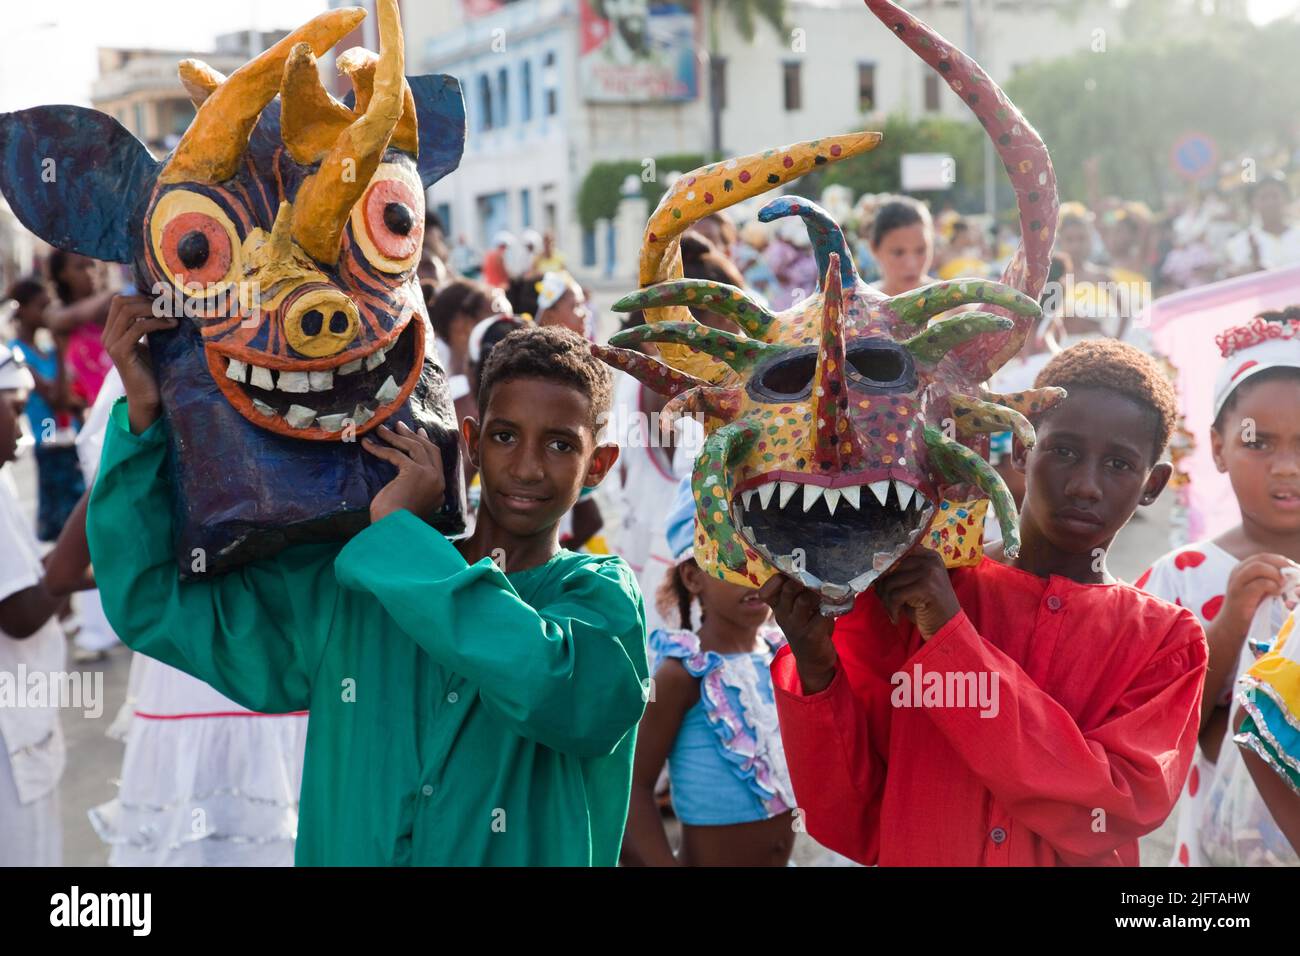 Santiago de cuba carnaval hires stock photography and images Alamy